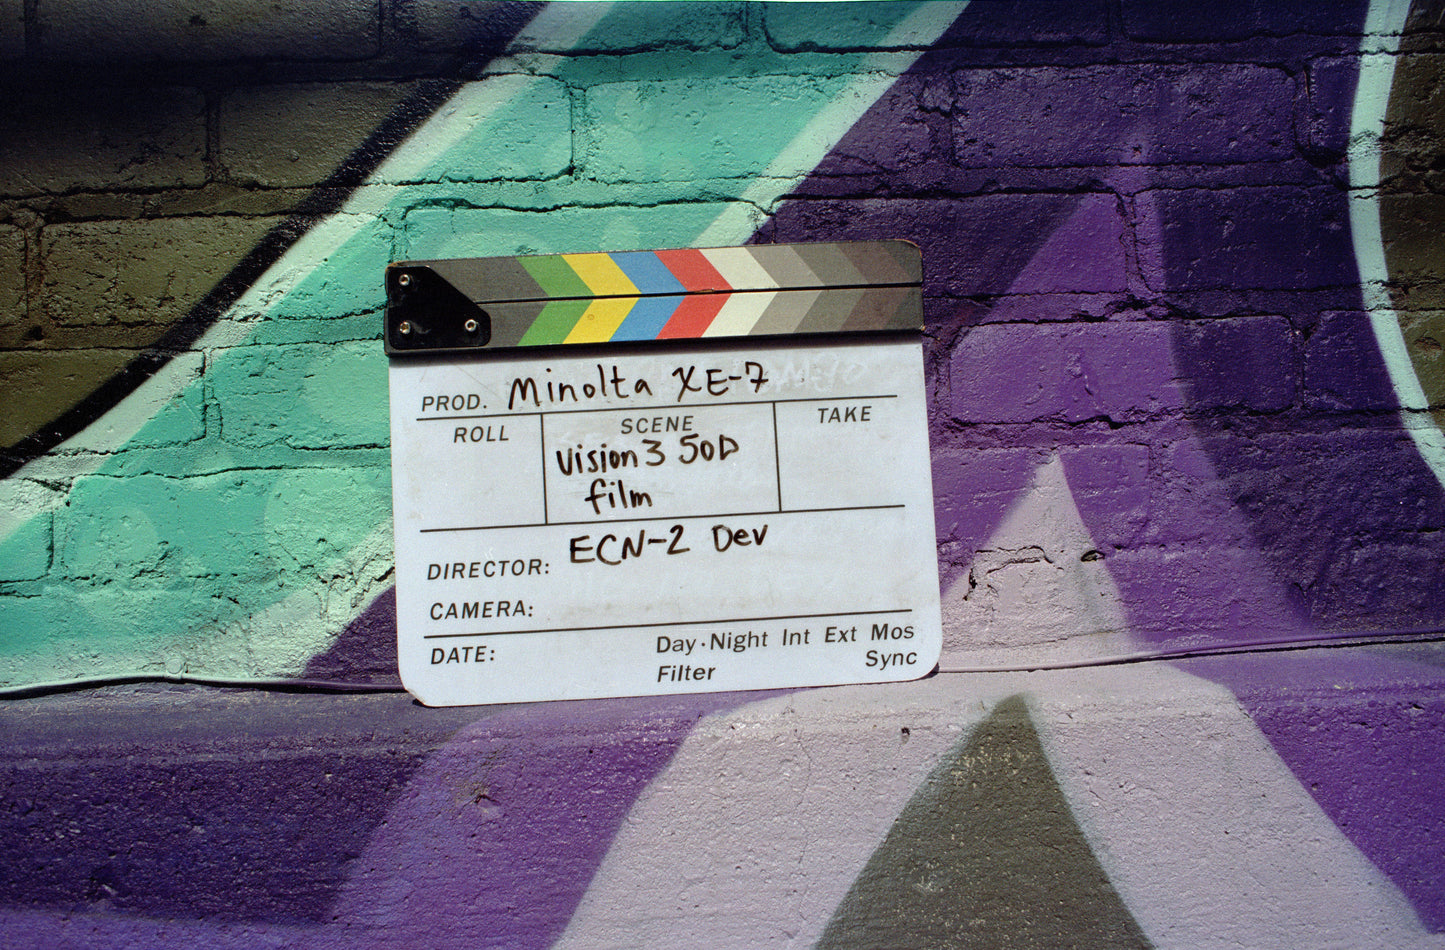 Minolta XE-7 35mm SLR (serial 1199607) w/ Minolta MD 28mm f2.8 lens